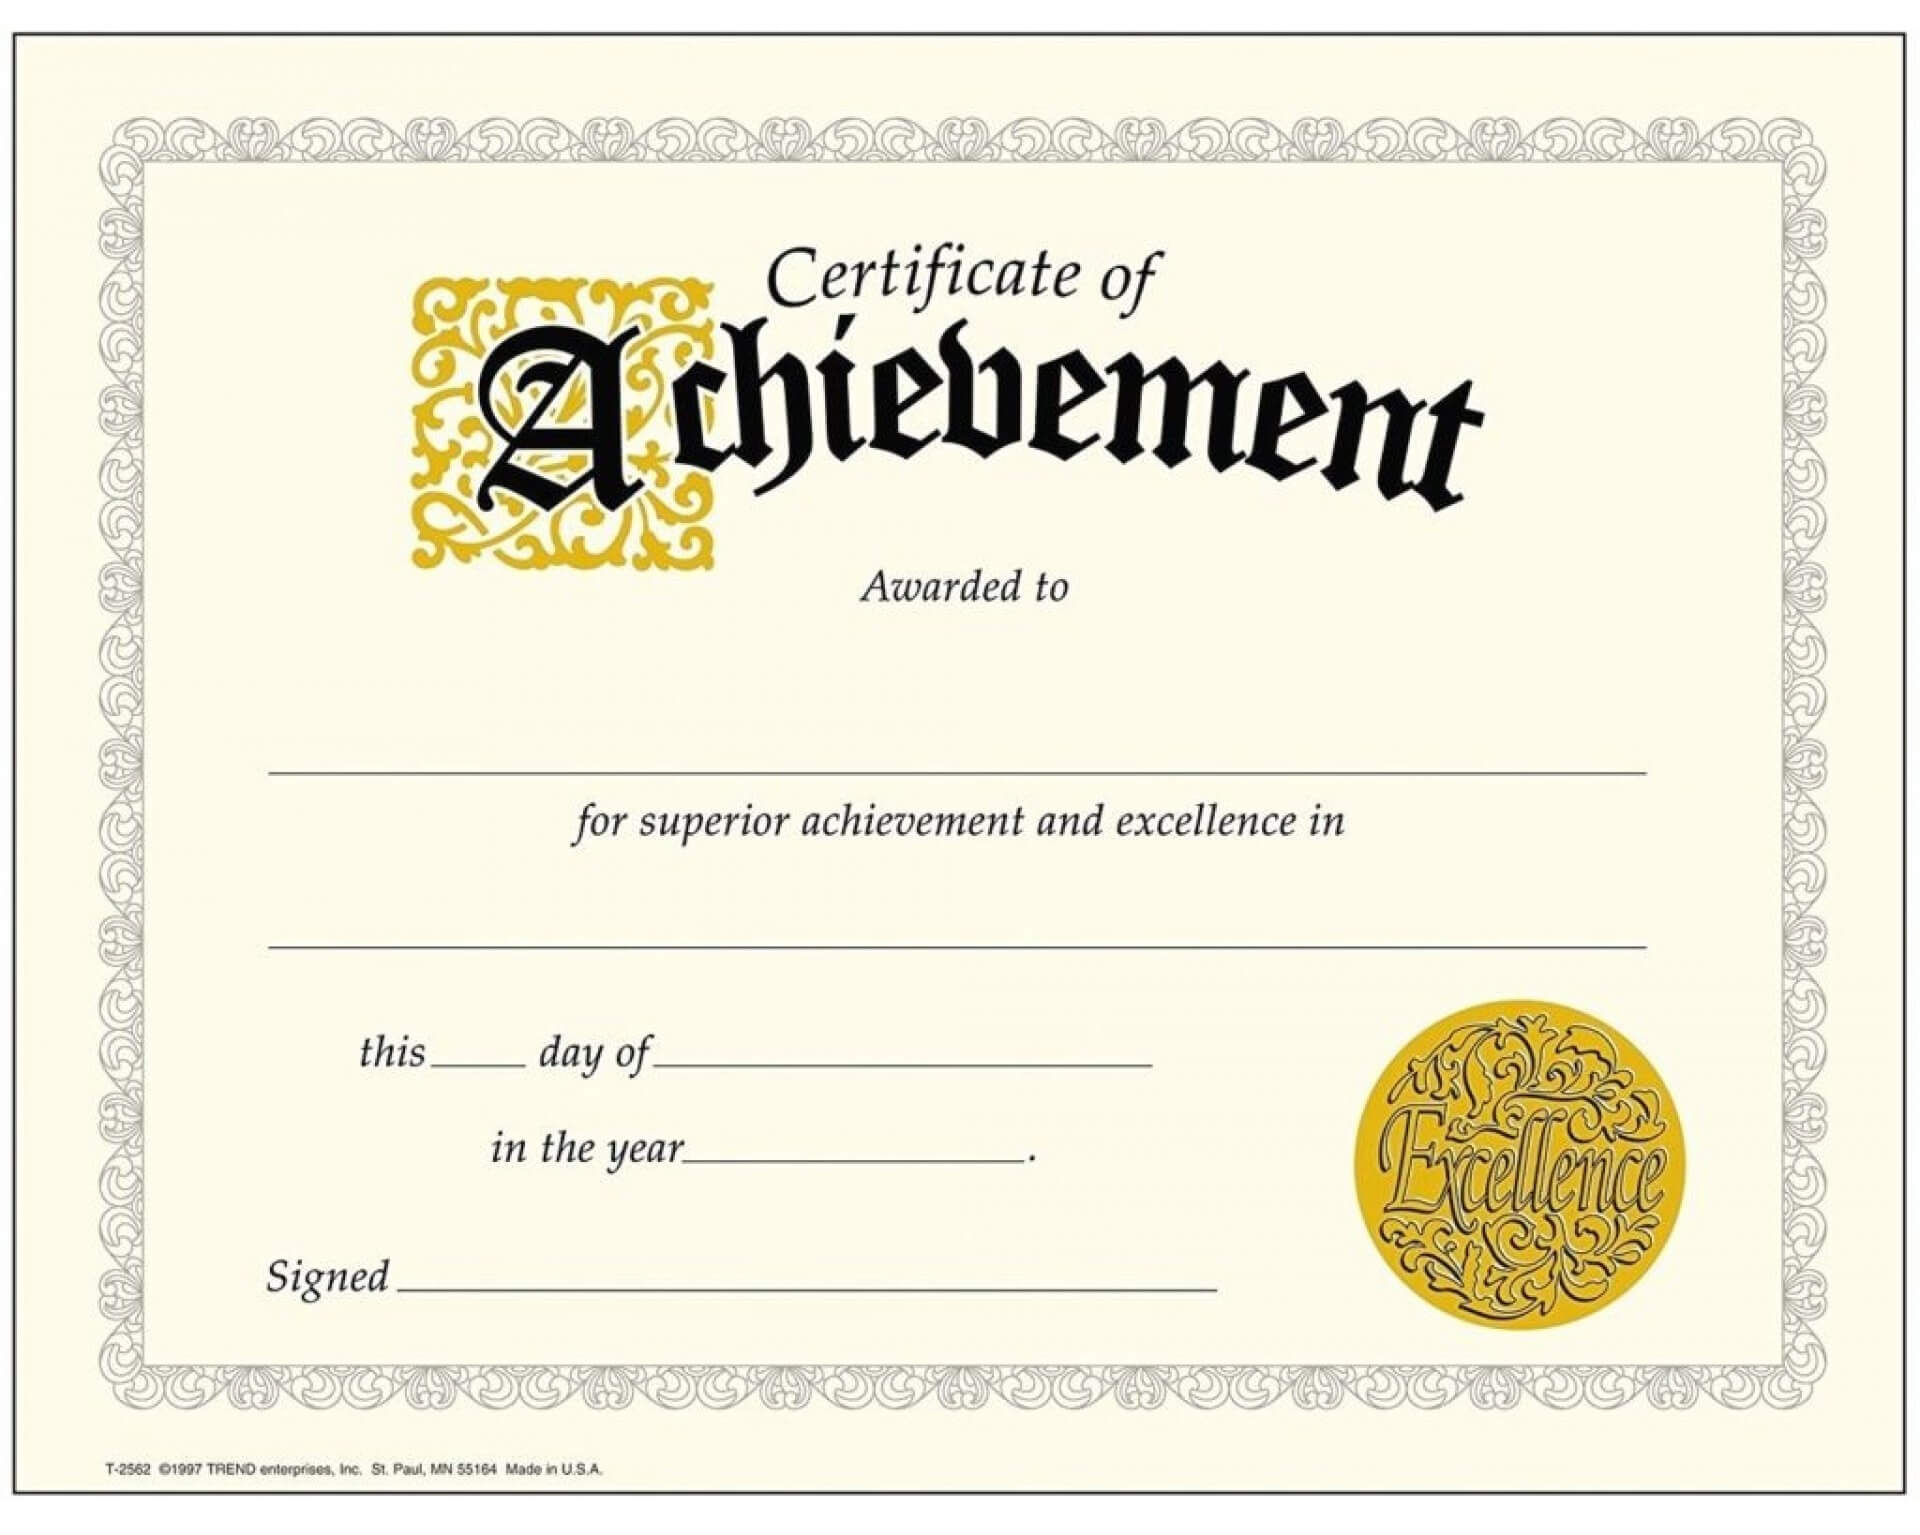 004 Certificate Of Achievement Template Ideas Phenomenal With Certificate Of Accomplishment Template Free